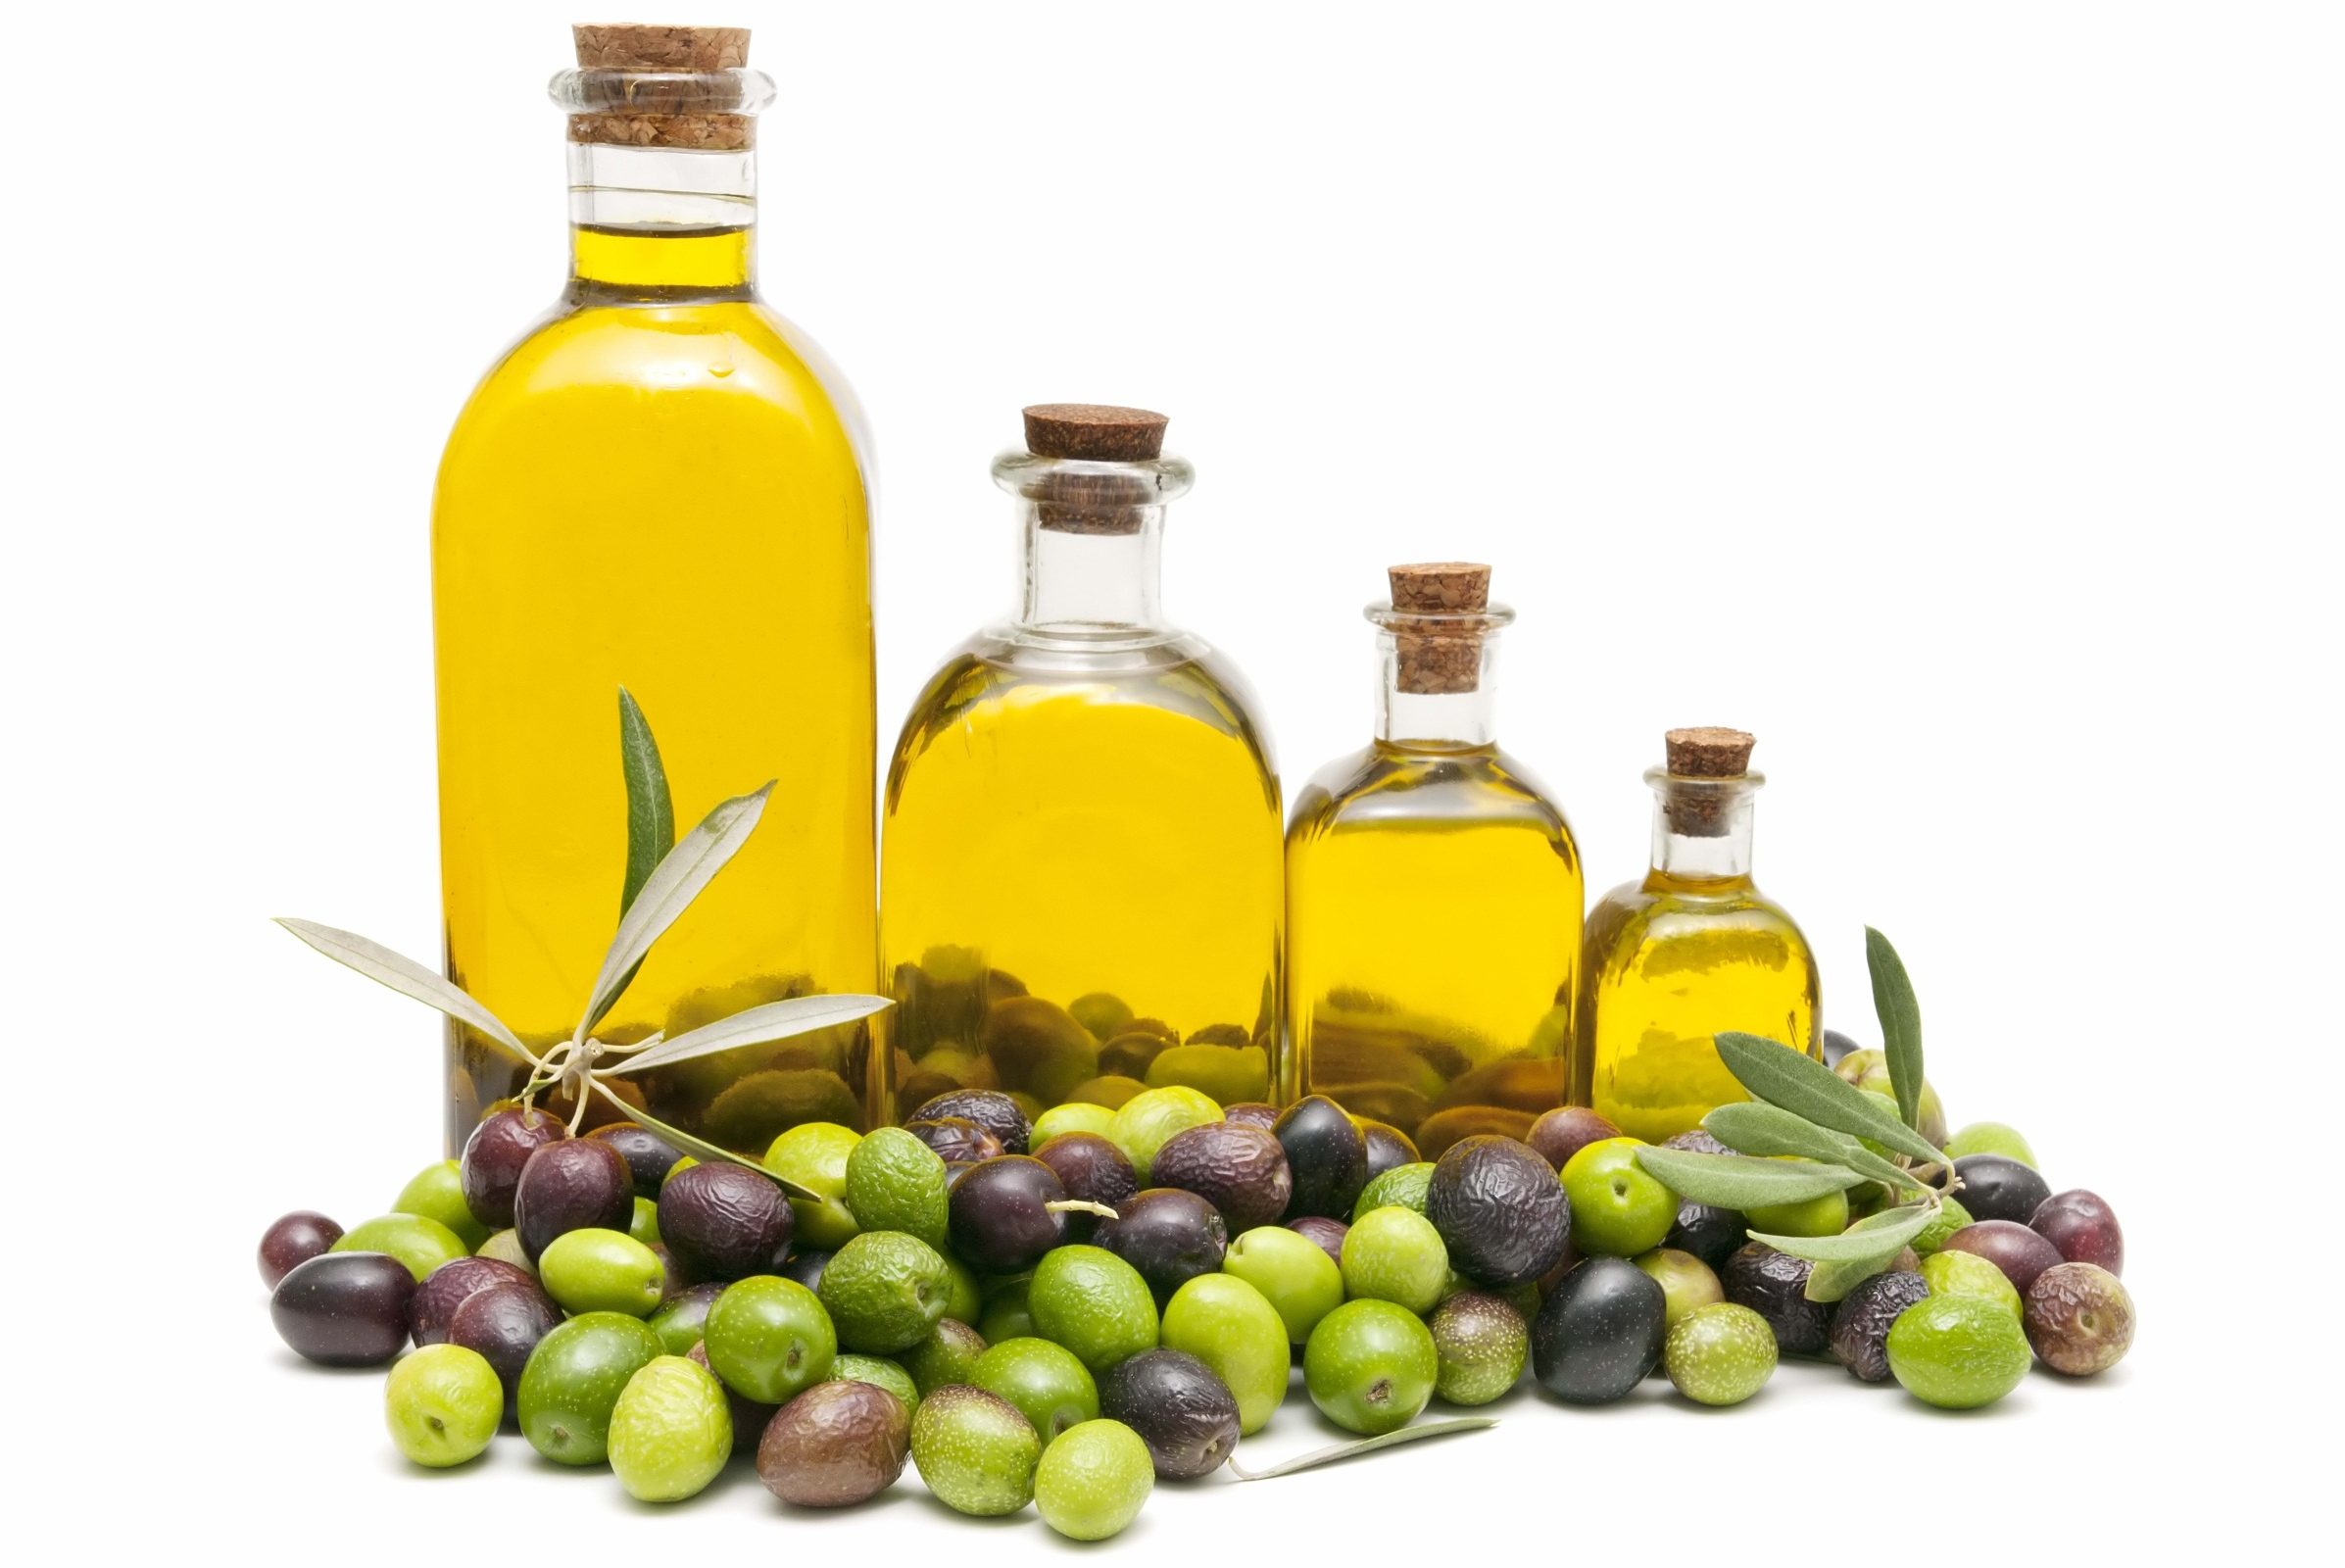 The Enlightening Olive